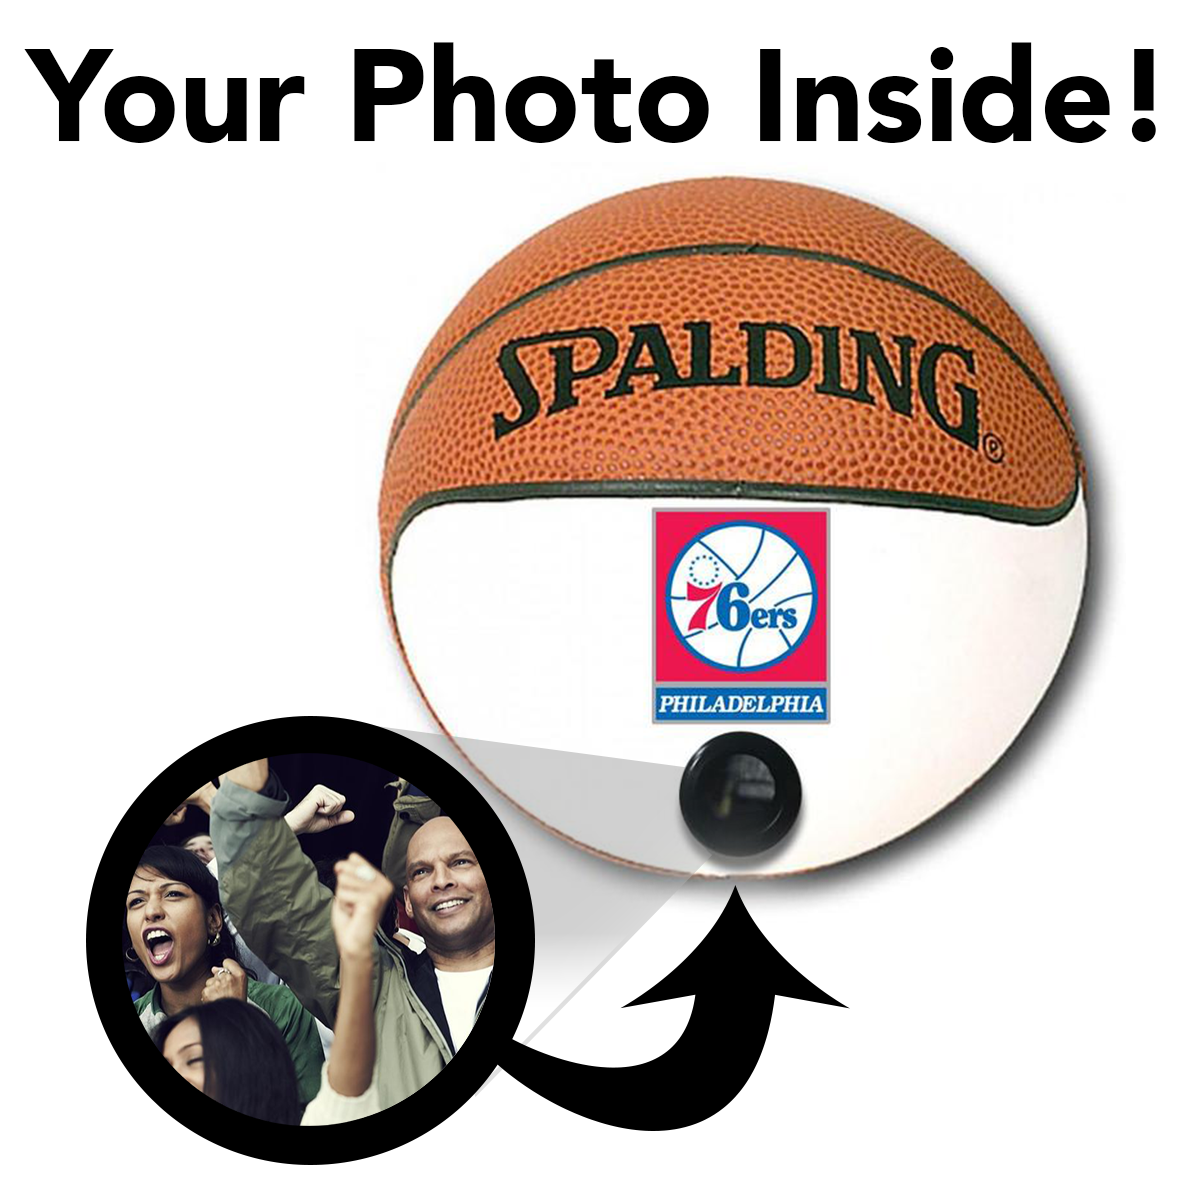 76ers NBA Collectible Miniature Basketball - Picture Inside - FANZ Collectibles - Fanz Collectibles